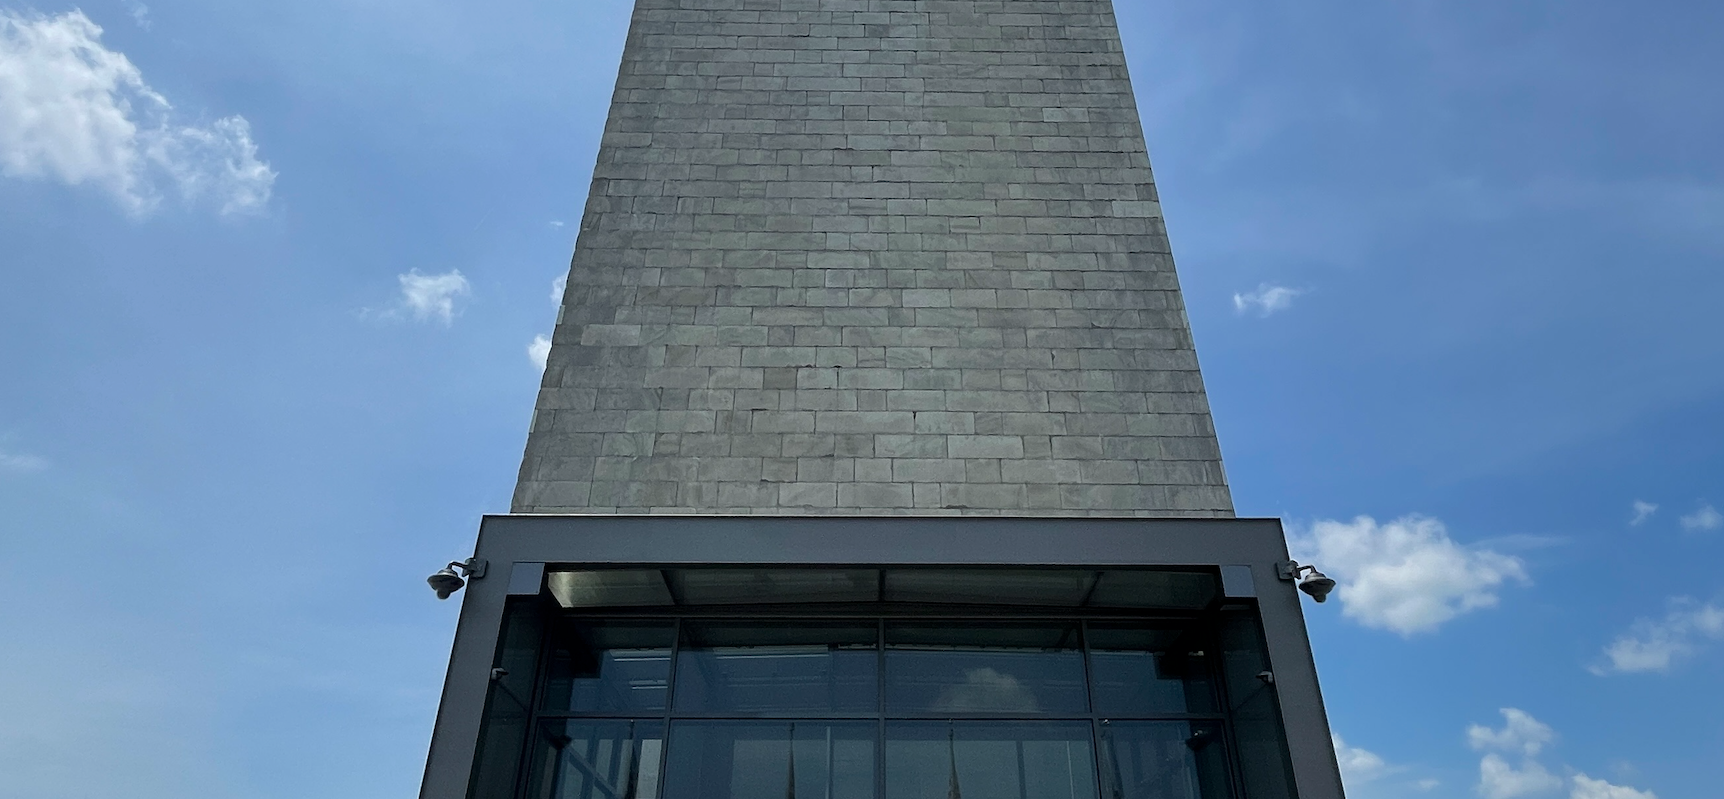 Securing Historic Landmarks: The Washington Monument Vestibule Project